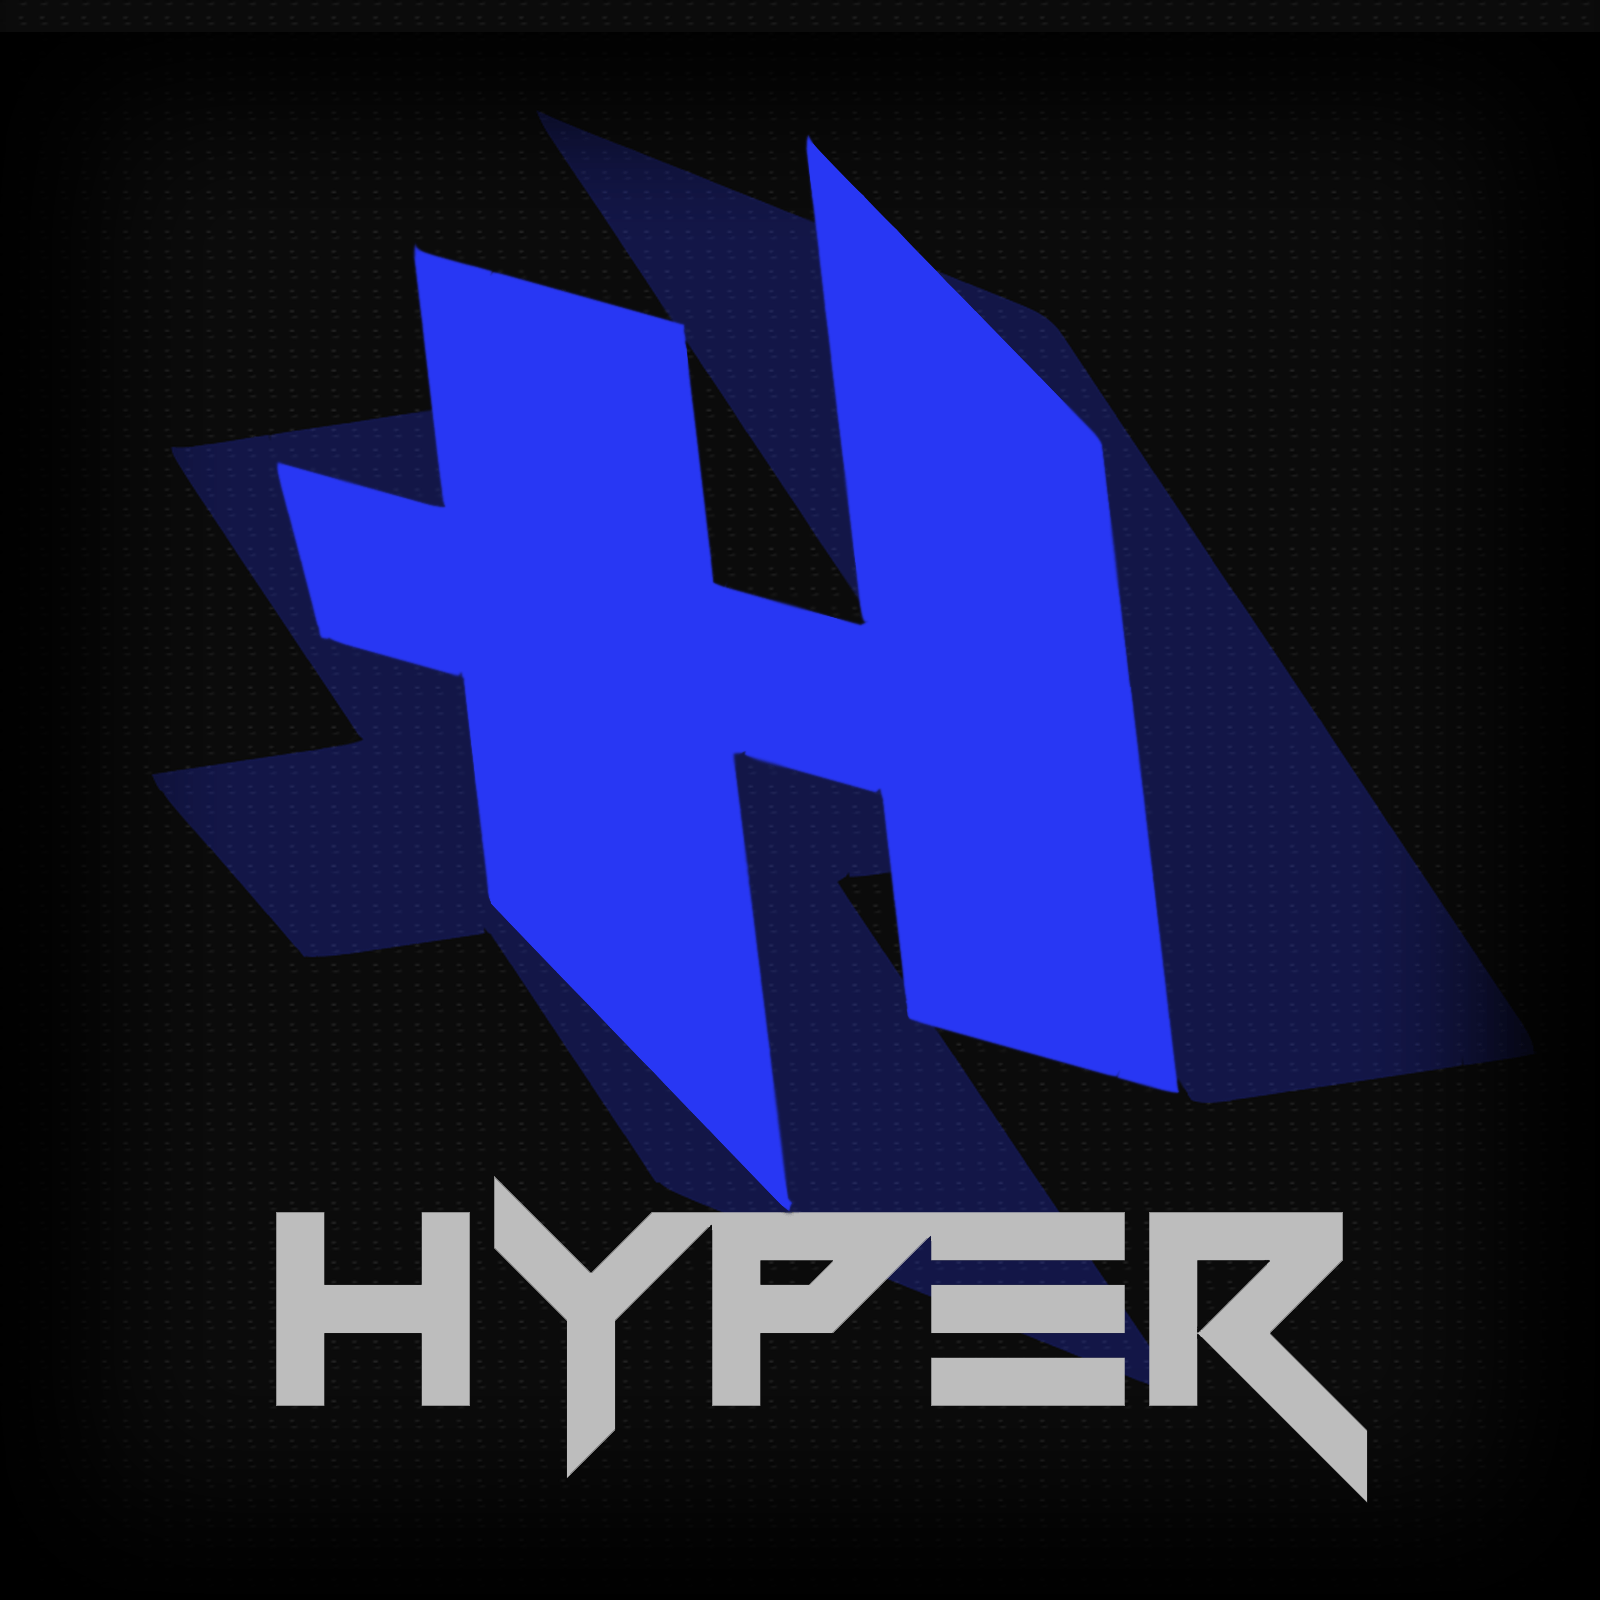 Hyper Logo - Es.HYPER logo. - Album on Imgur